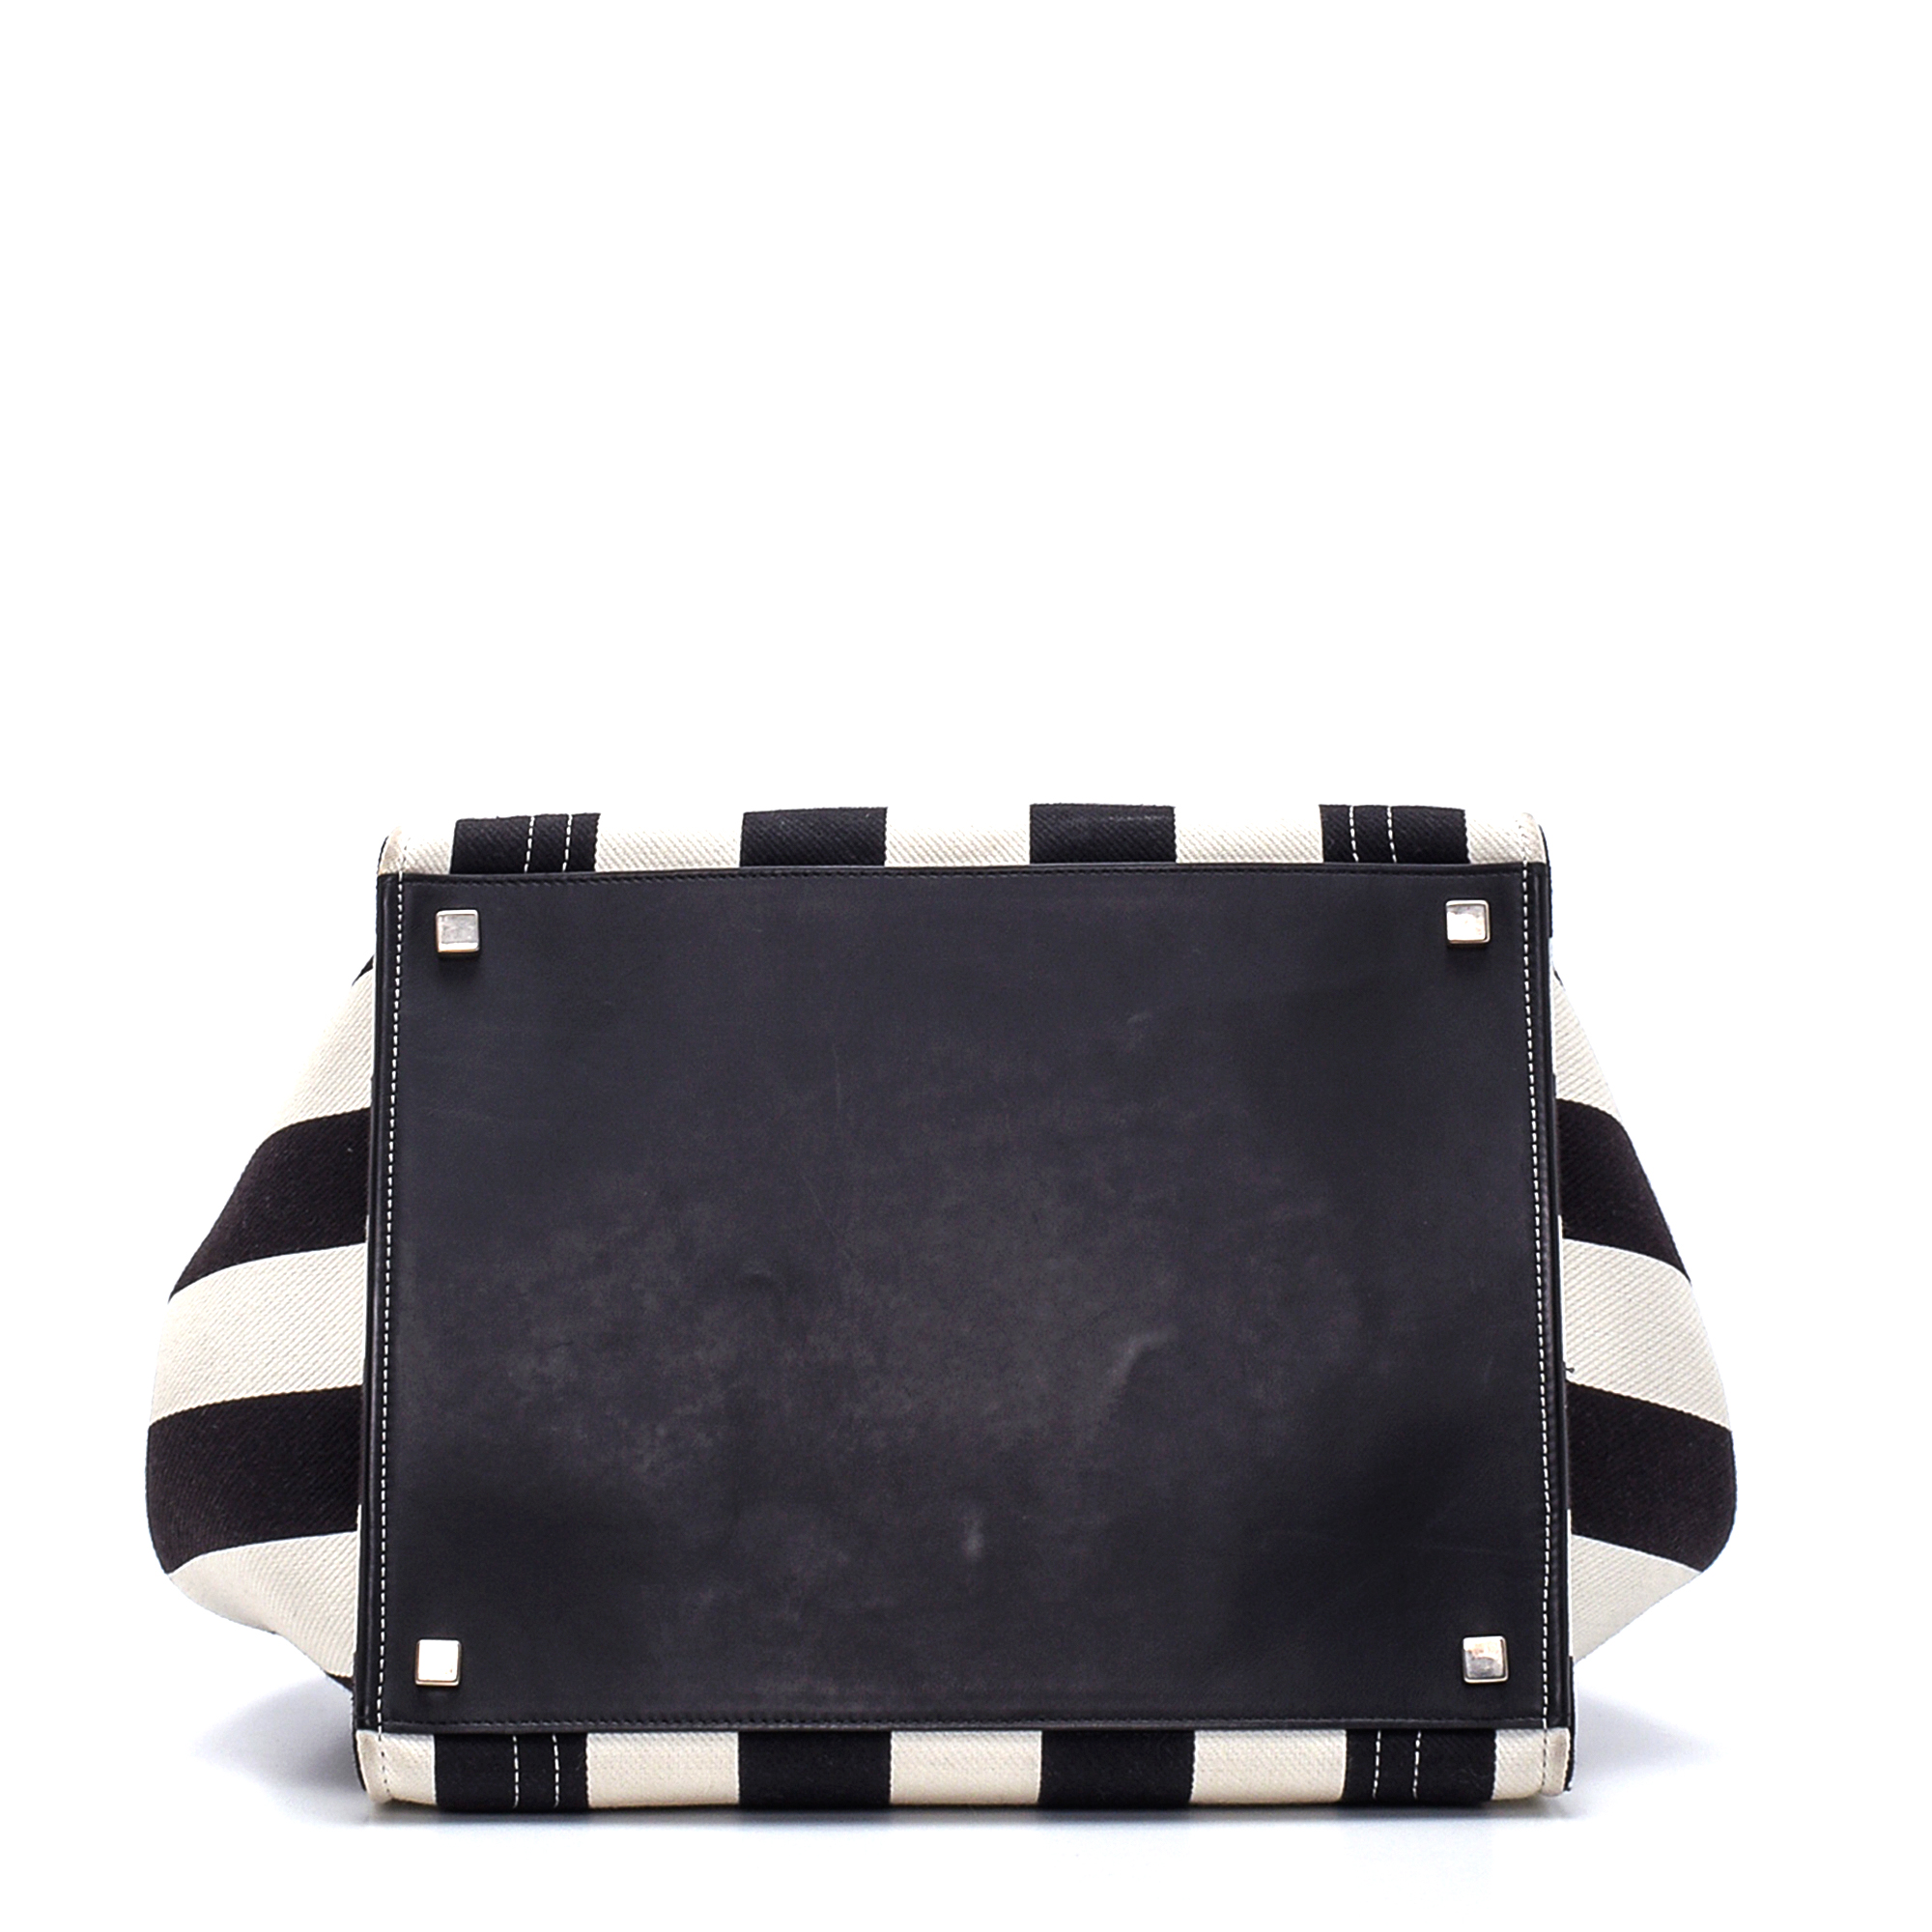 Celine - Black / White Striped Canvas Medium Phantom Luggage Bag